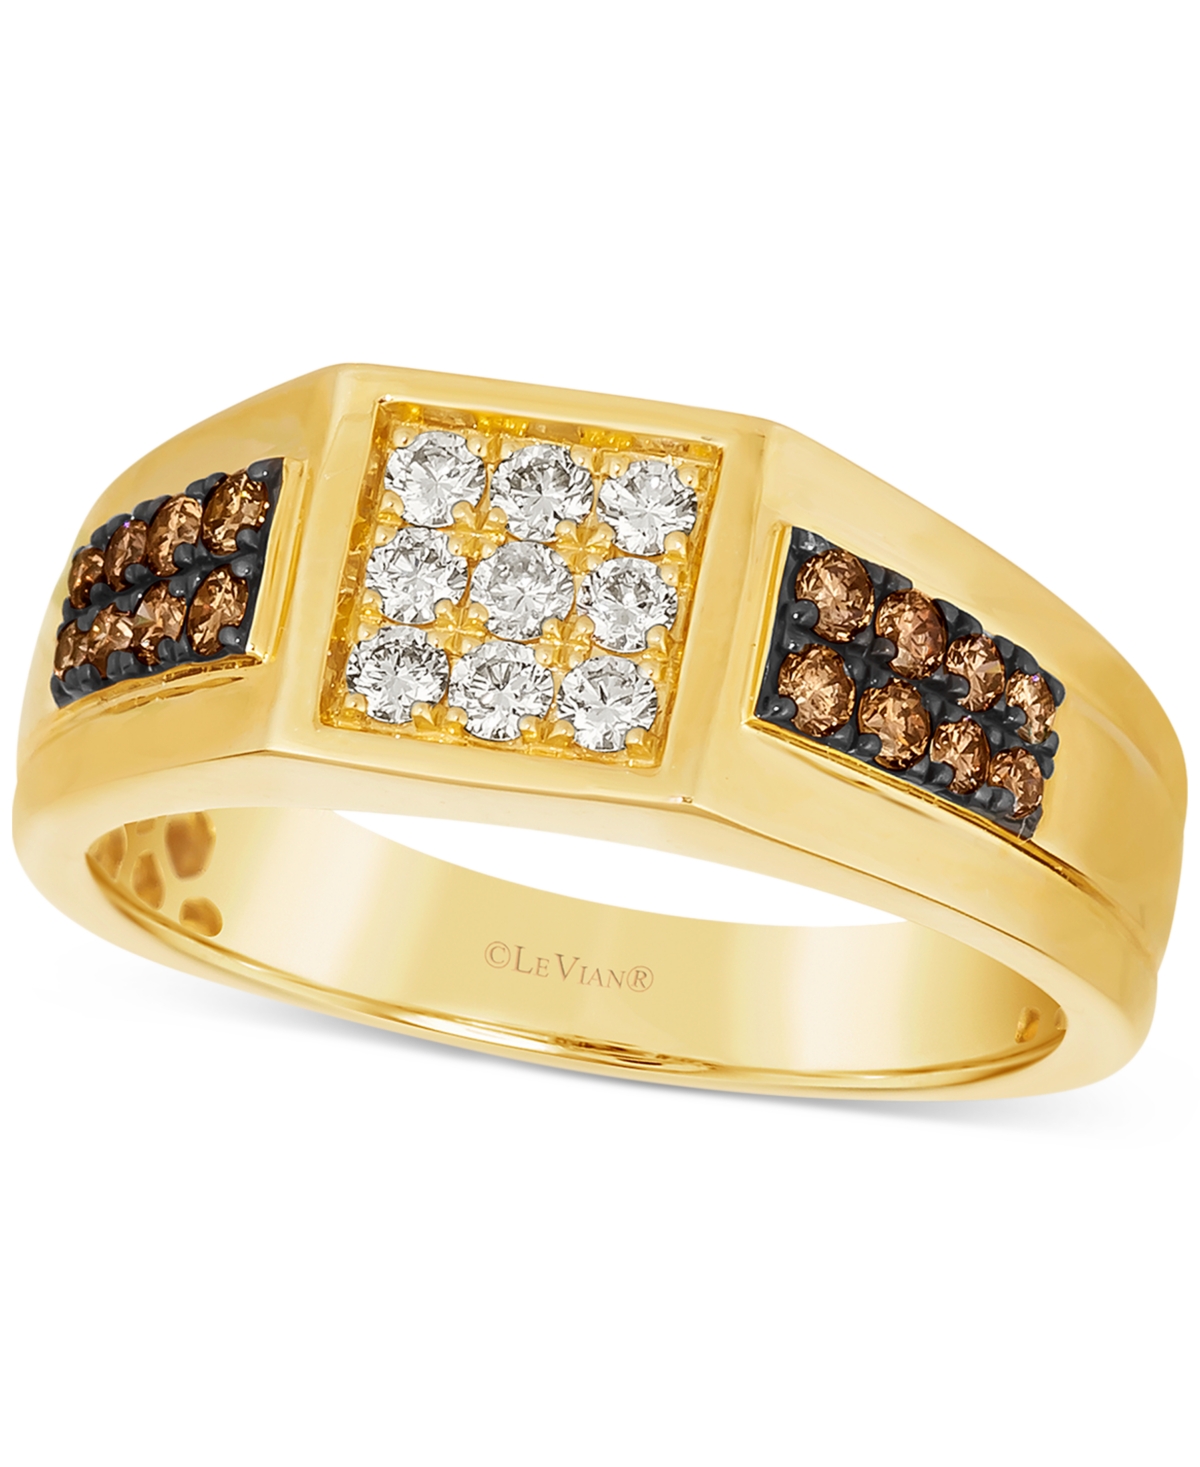 Chocolatier Men's Chocolate Diamond (1/3 ct. t.w.) & Vanilla Diamond (1/3 ct. t.w.) Cluster Ring in 14k Gold - Yellow Gold